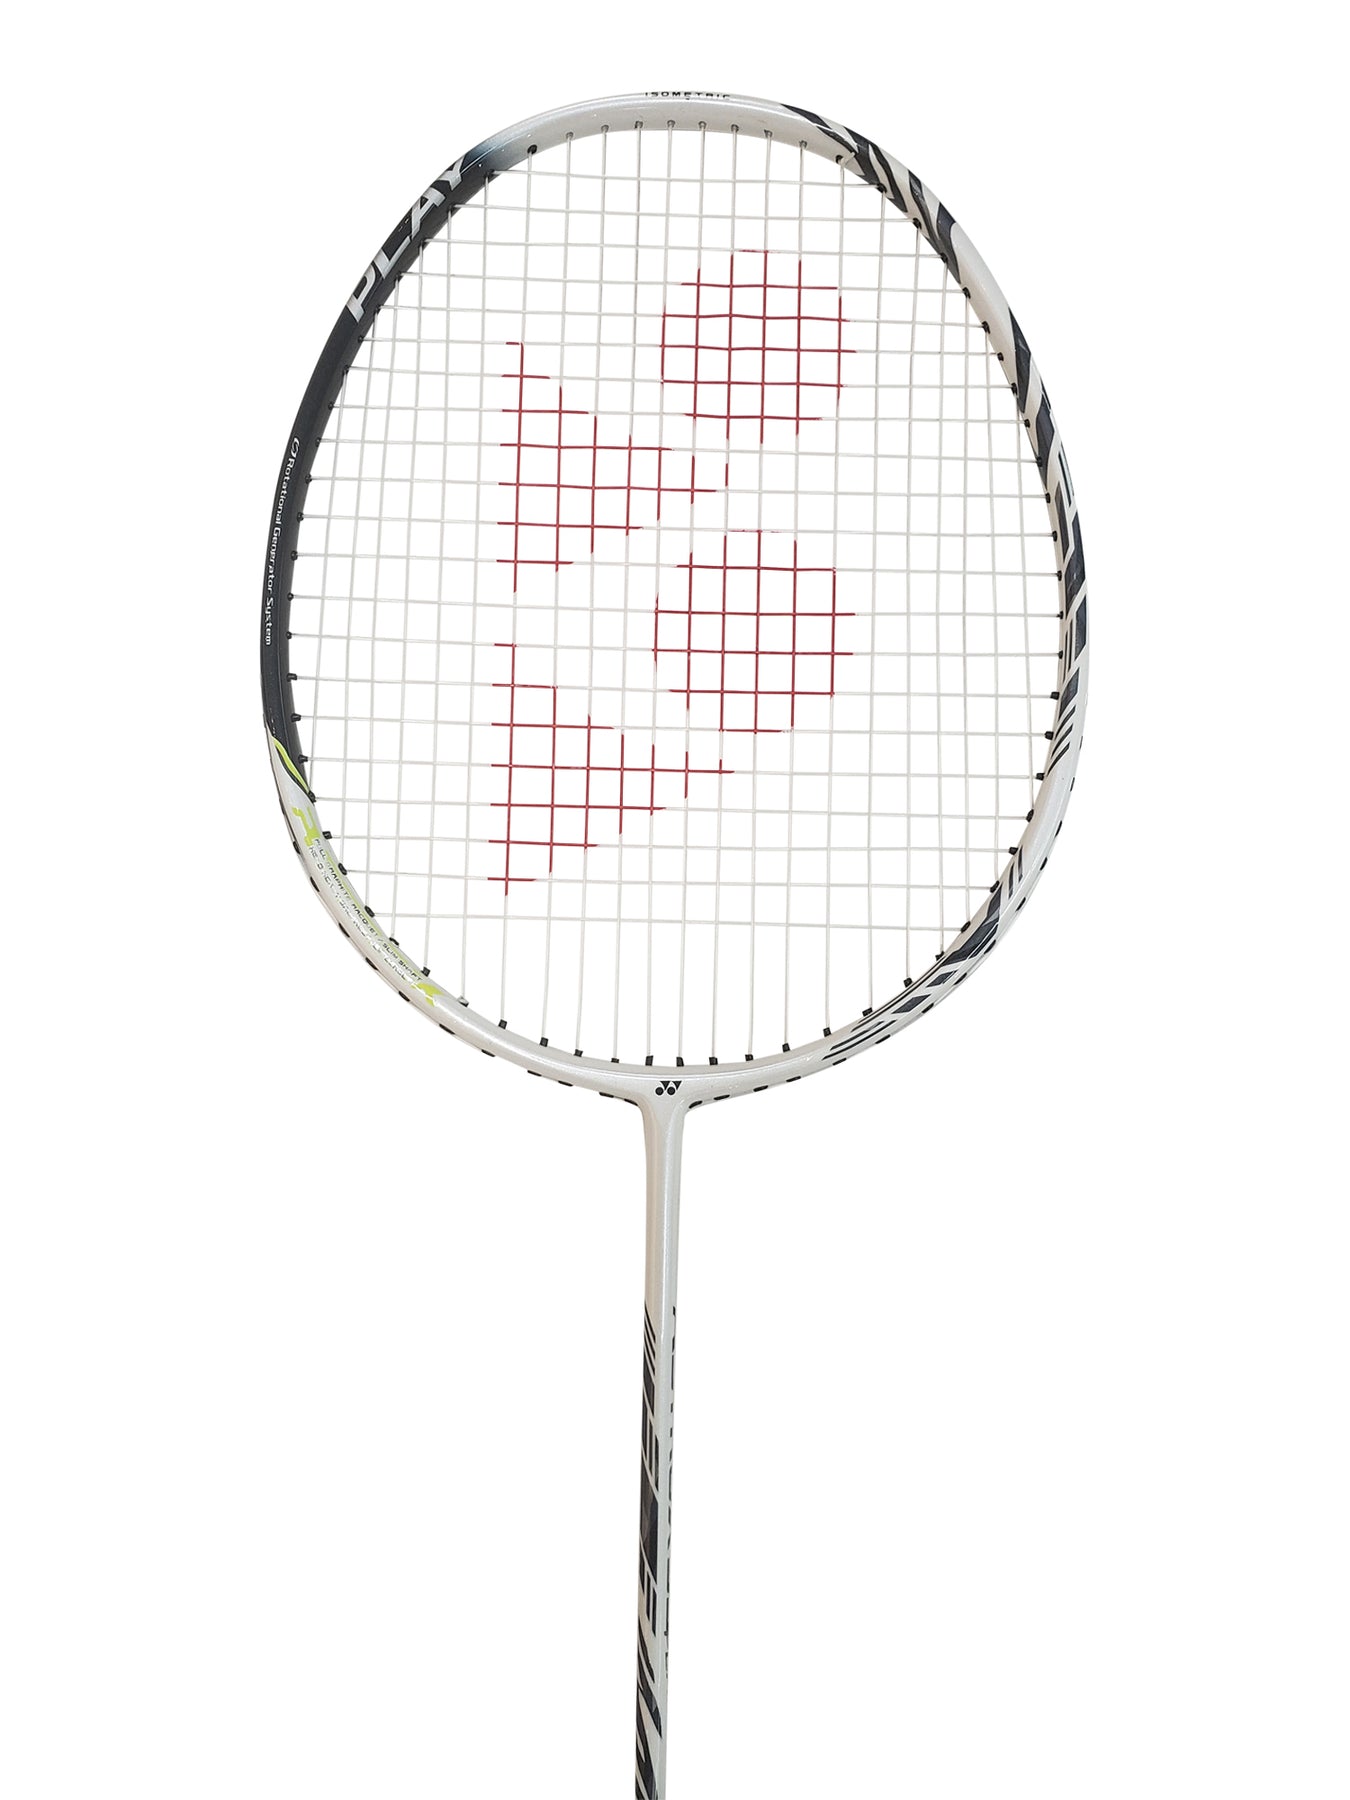 Beginner Badminton Rackets at Badminton Warehouse